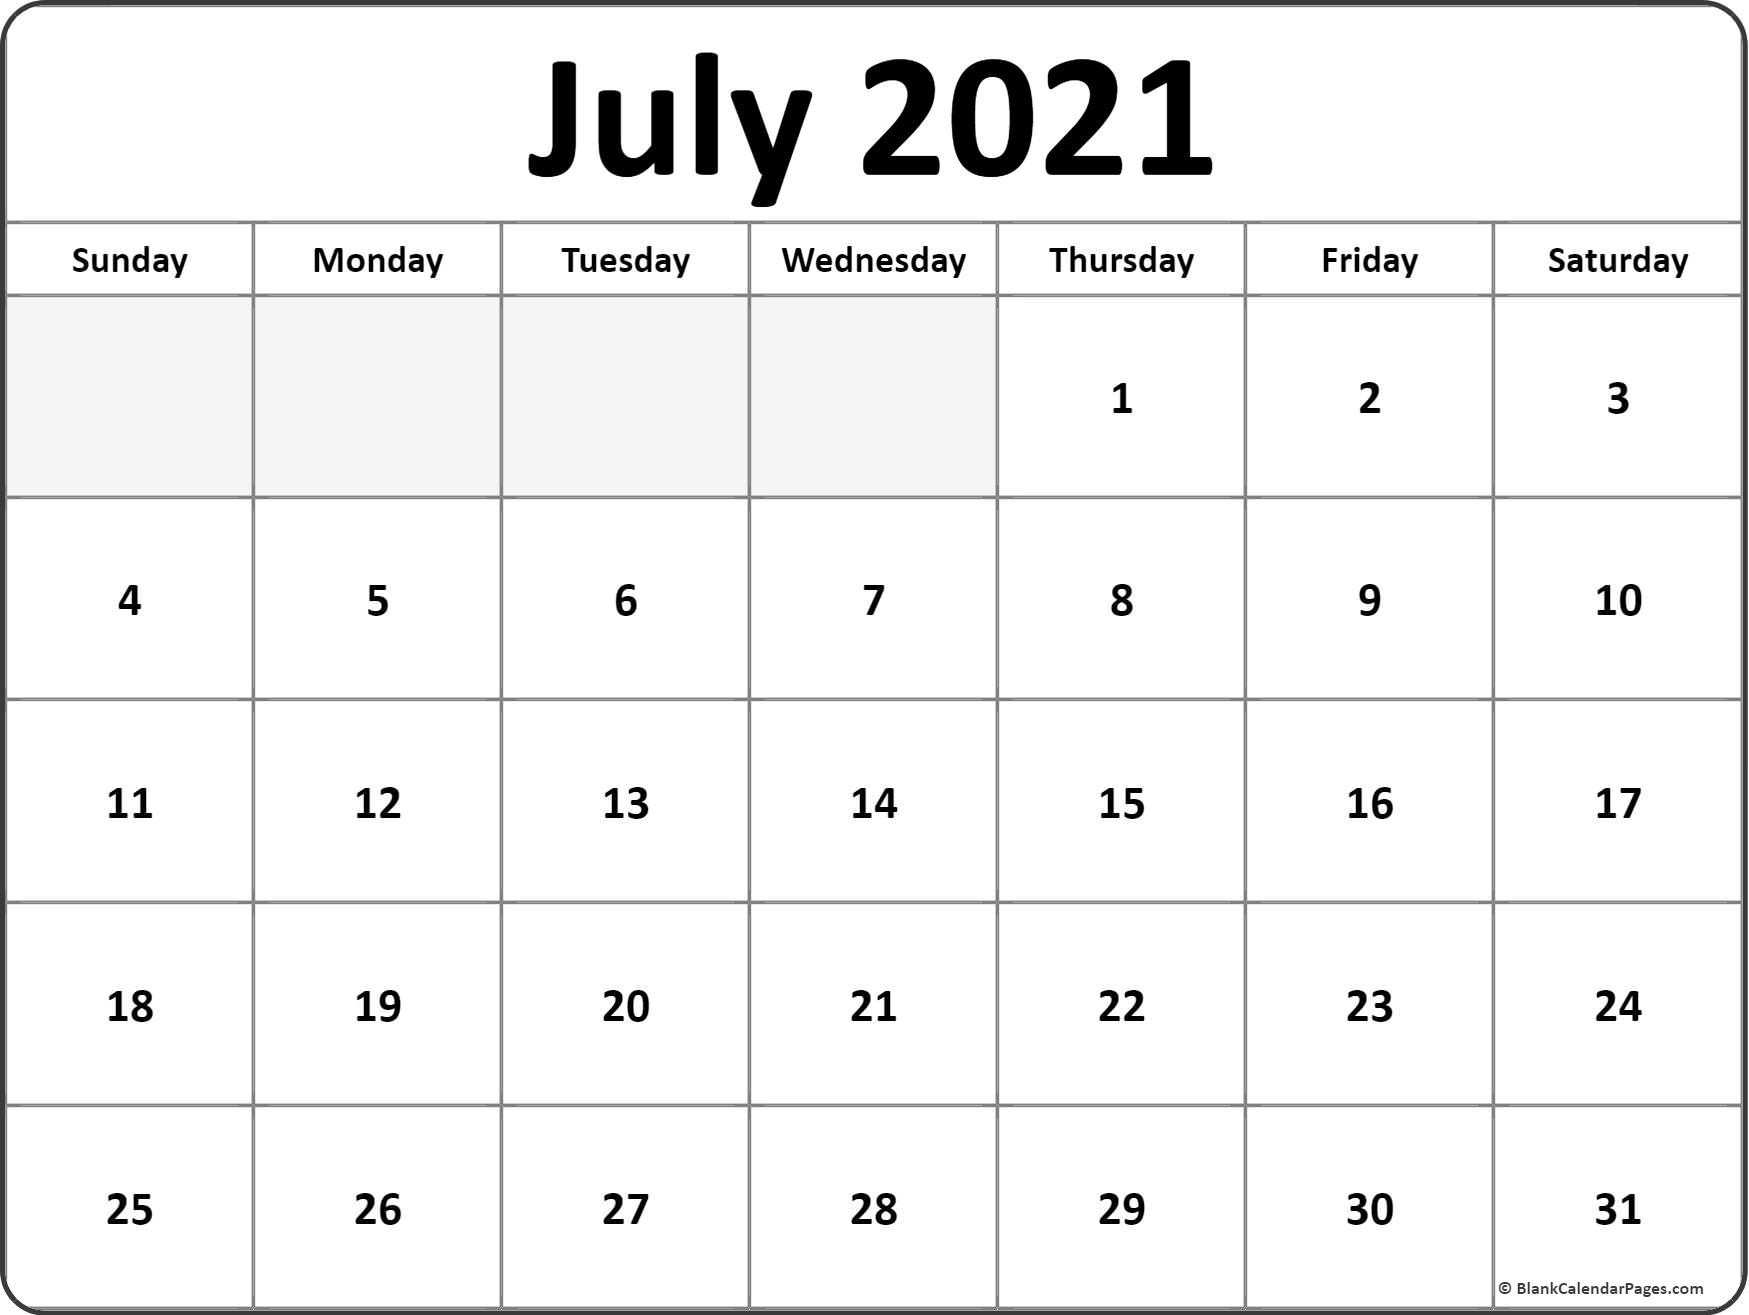 July 2021 Calendar With Holidays - Calendar 2020-July 2021 Calendar